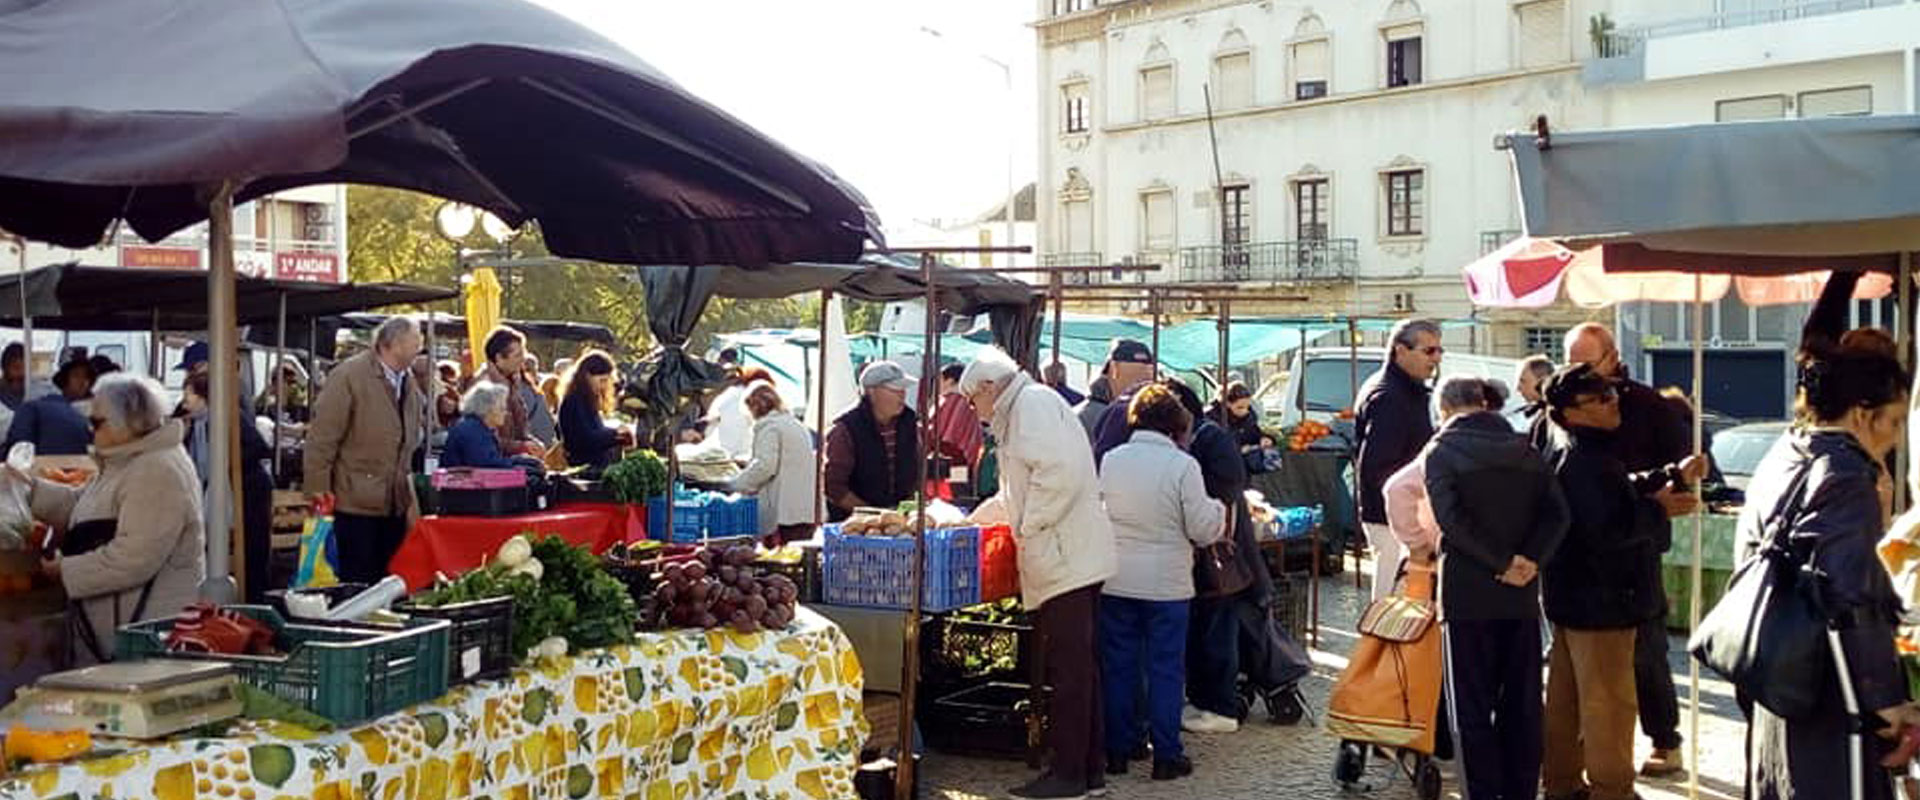 Vegetable Market in Faro